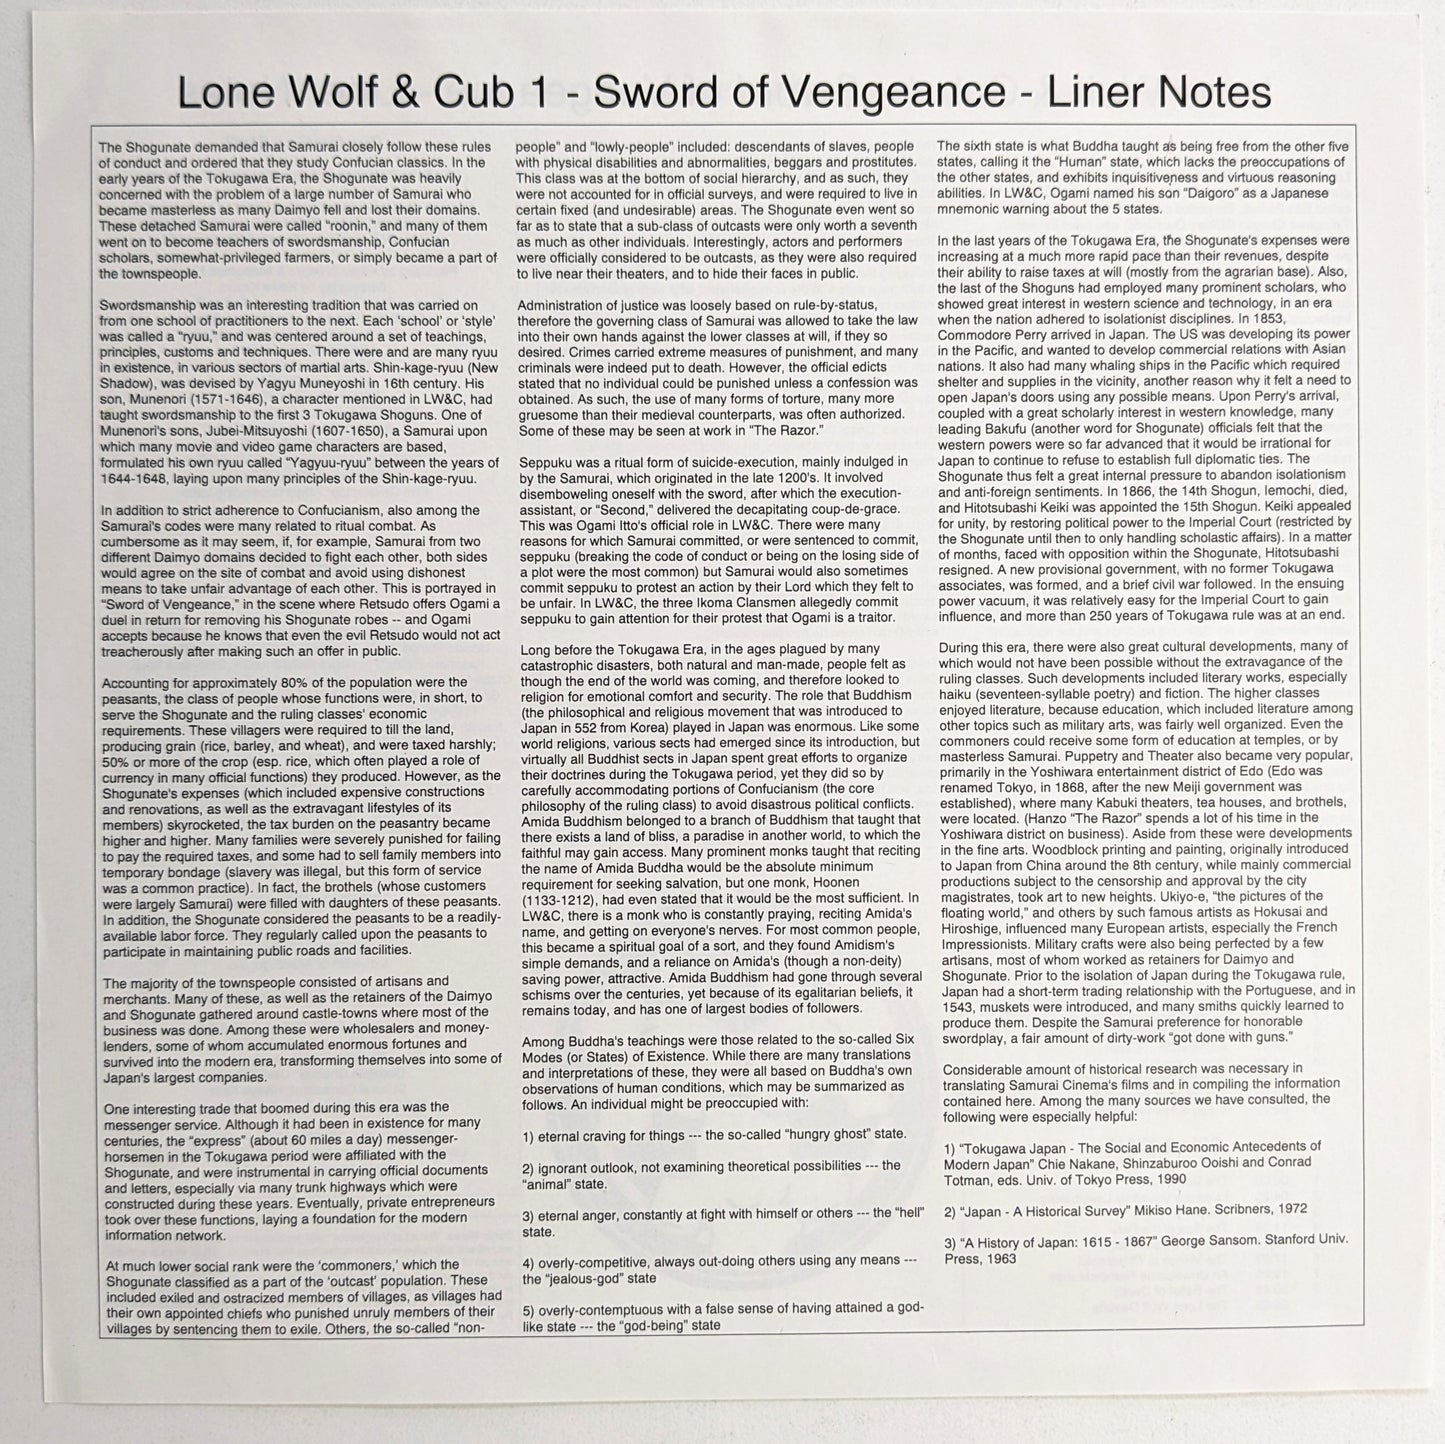 Lone Wolf and Cub: Sword of Vengeance (1972) North American Laserdisc